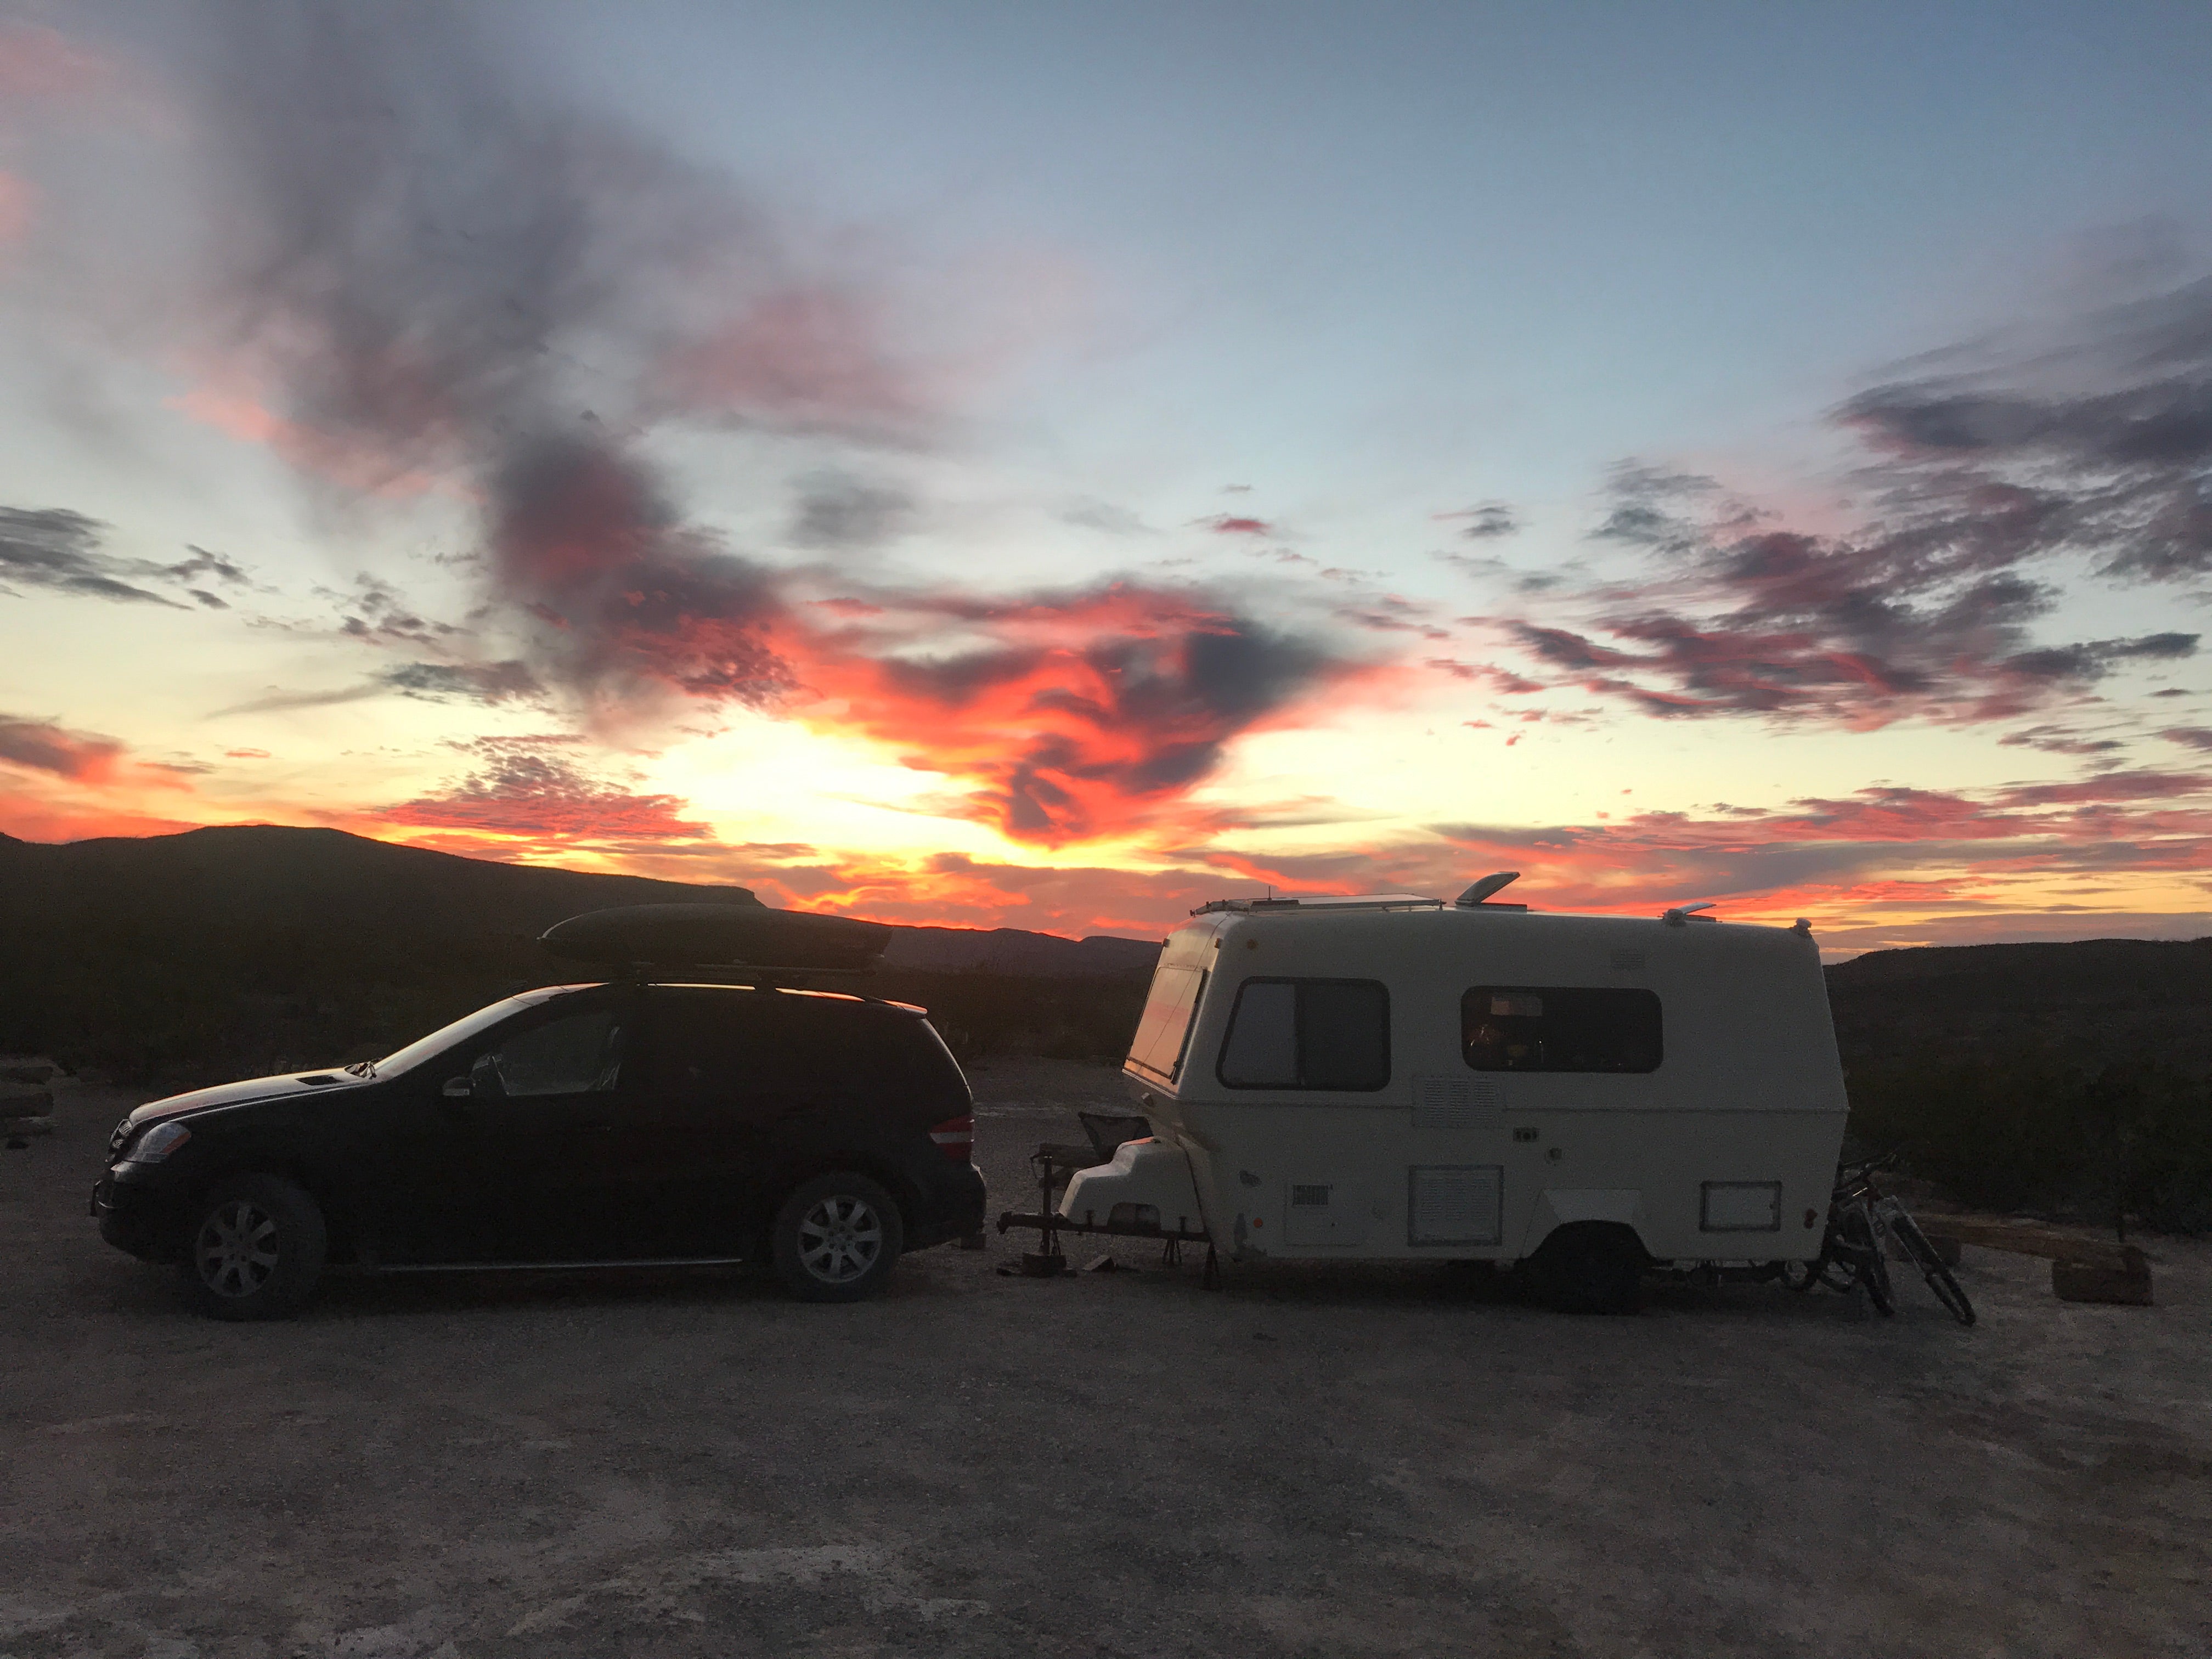 Sunset at campsite